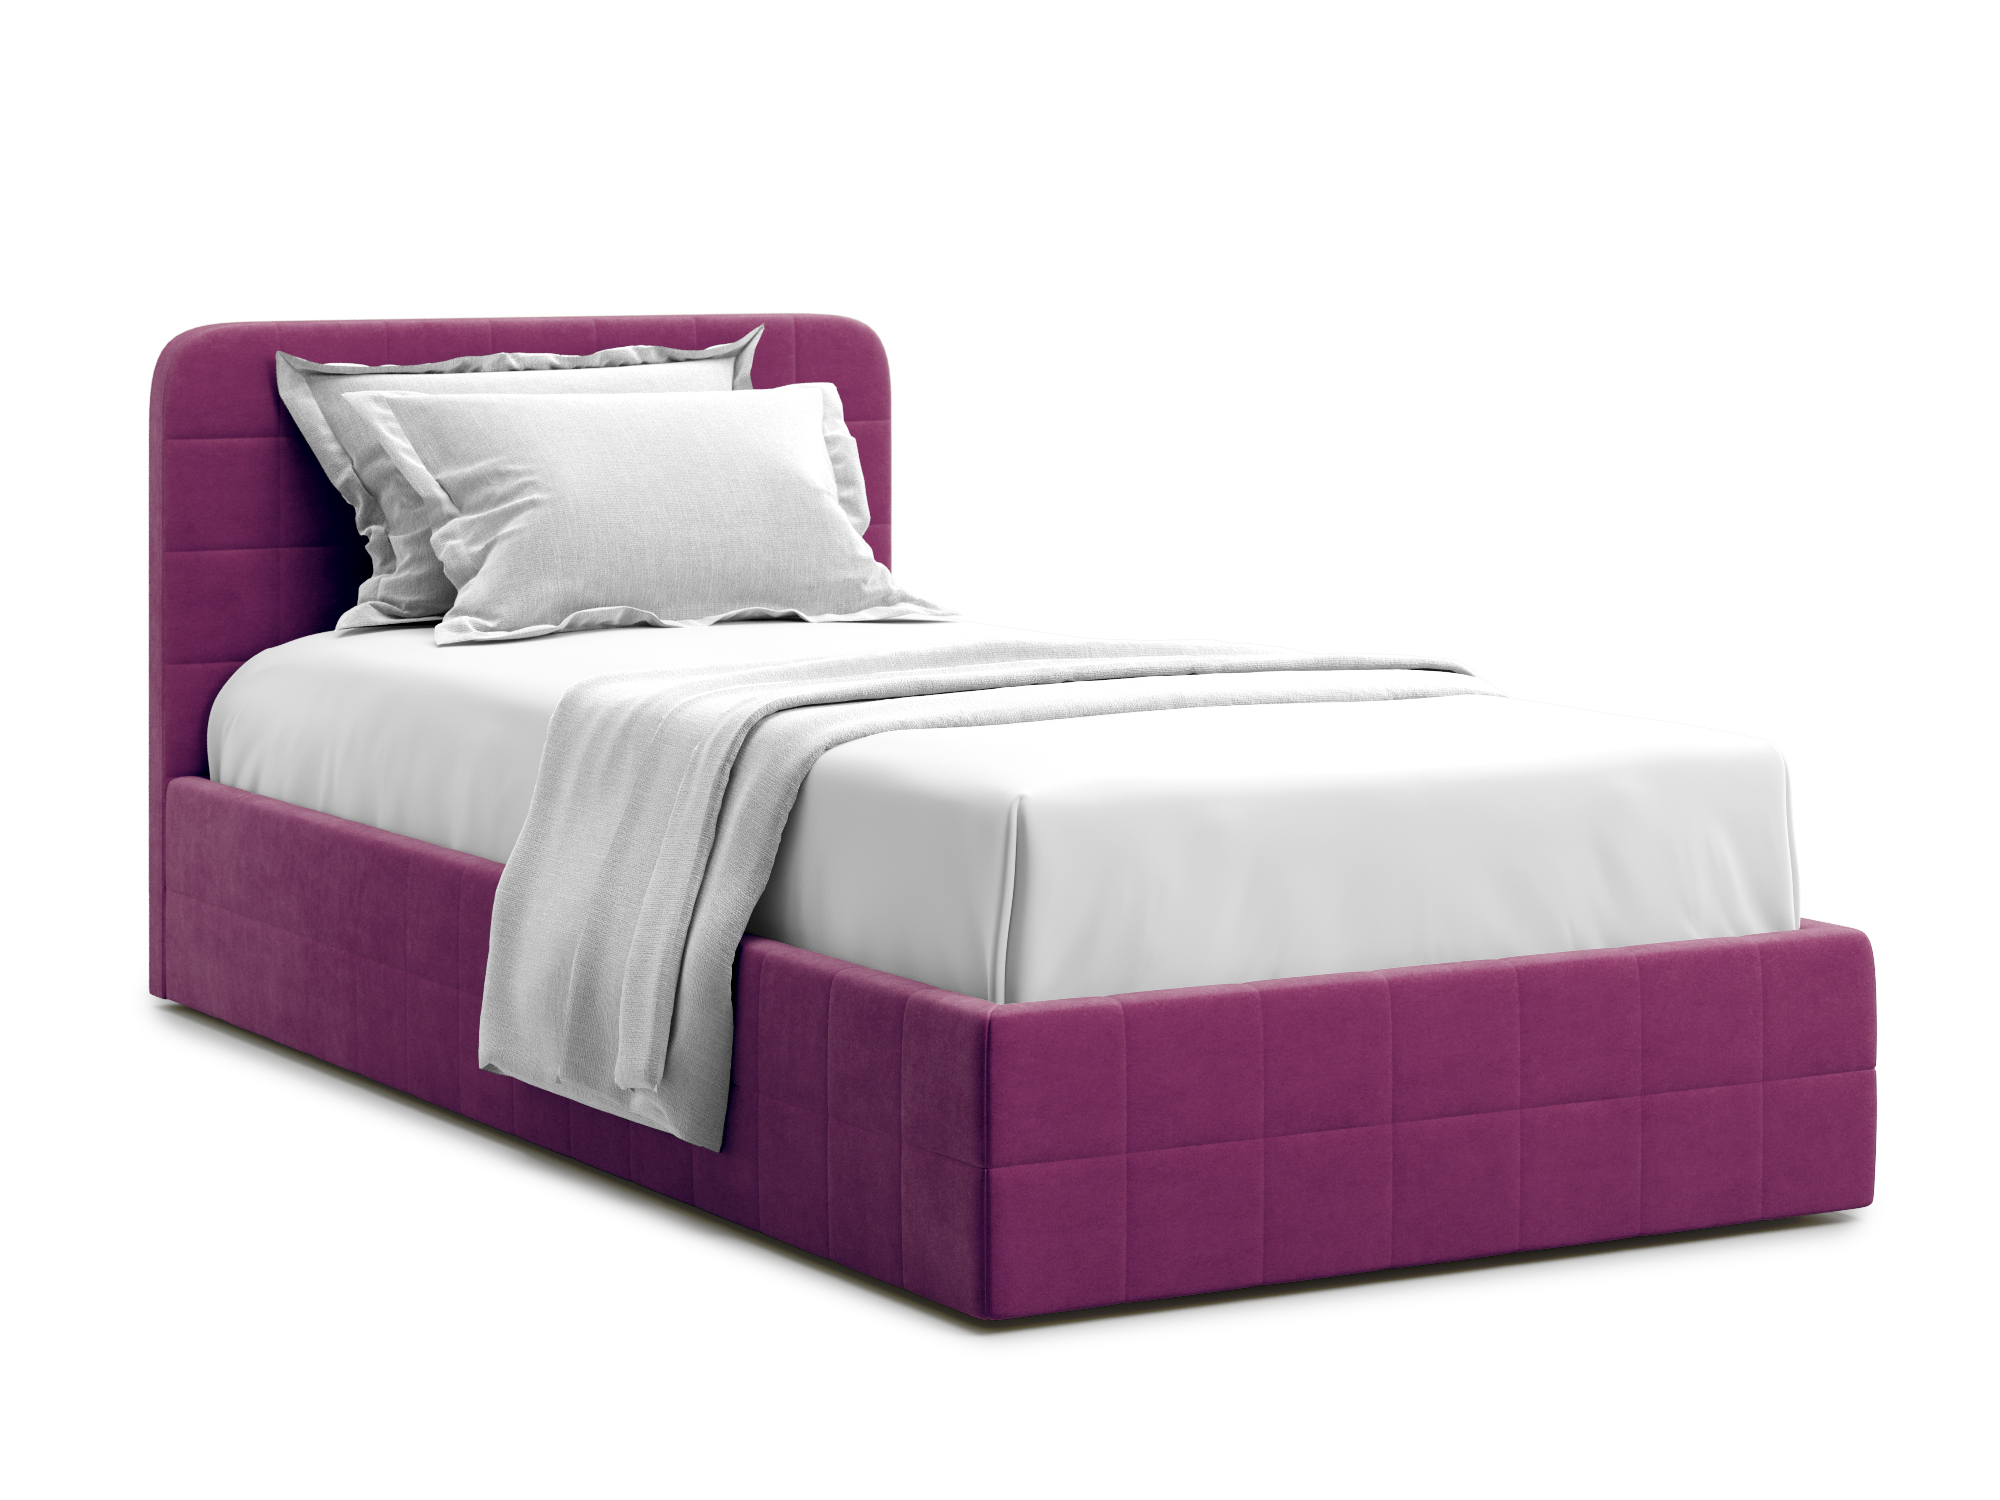 Кровать Adda 90 Velutto 15 Фиолетовый, Массив, ДСП кровать adda 120 velutto 17 бежевый массив дсп